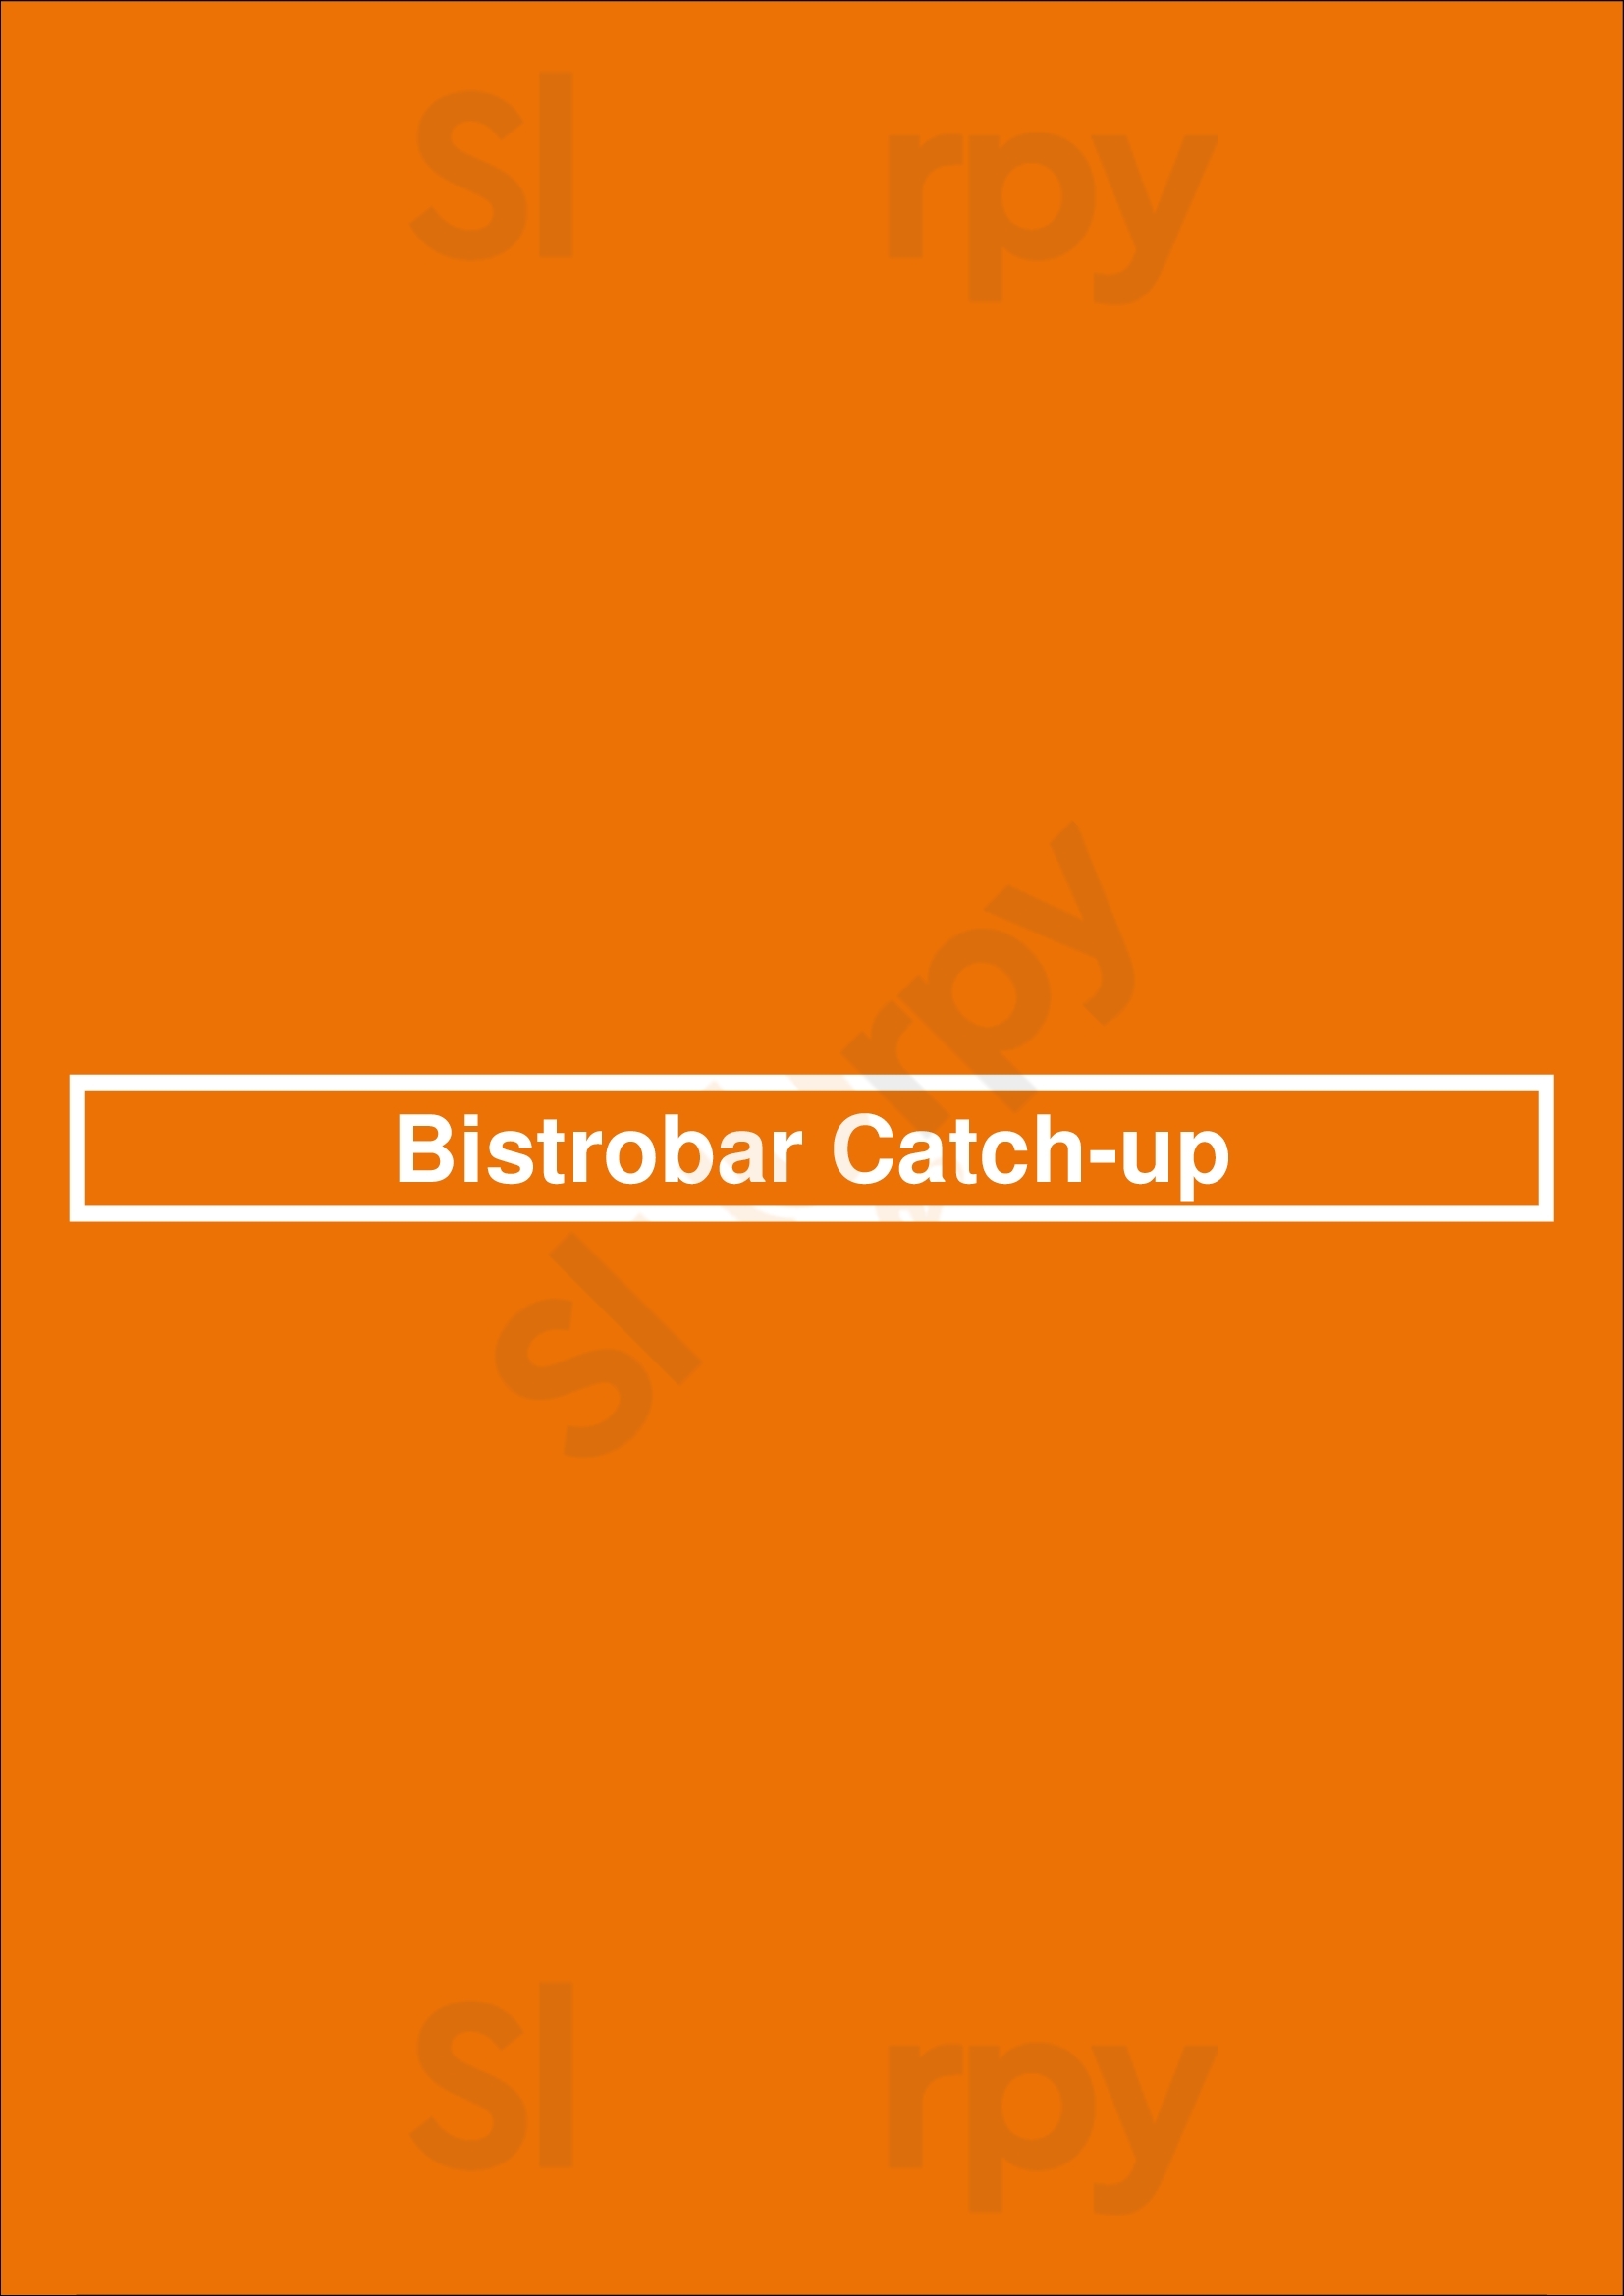 Bistrobar Catch-up Den Haag Menu - 1